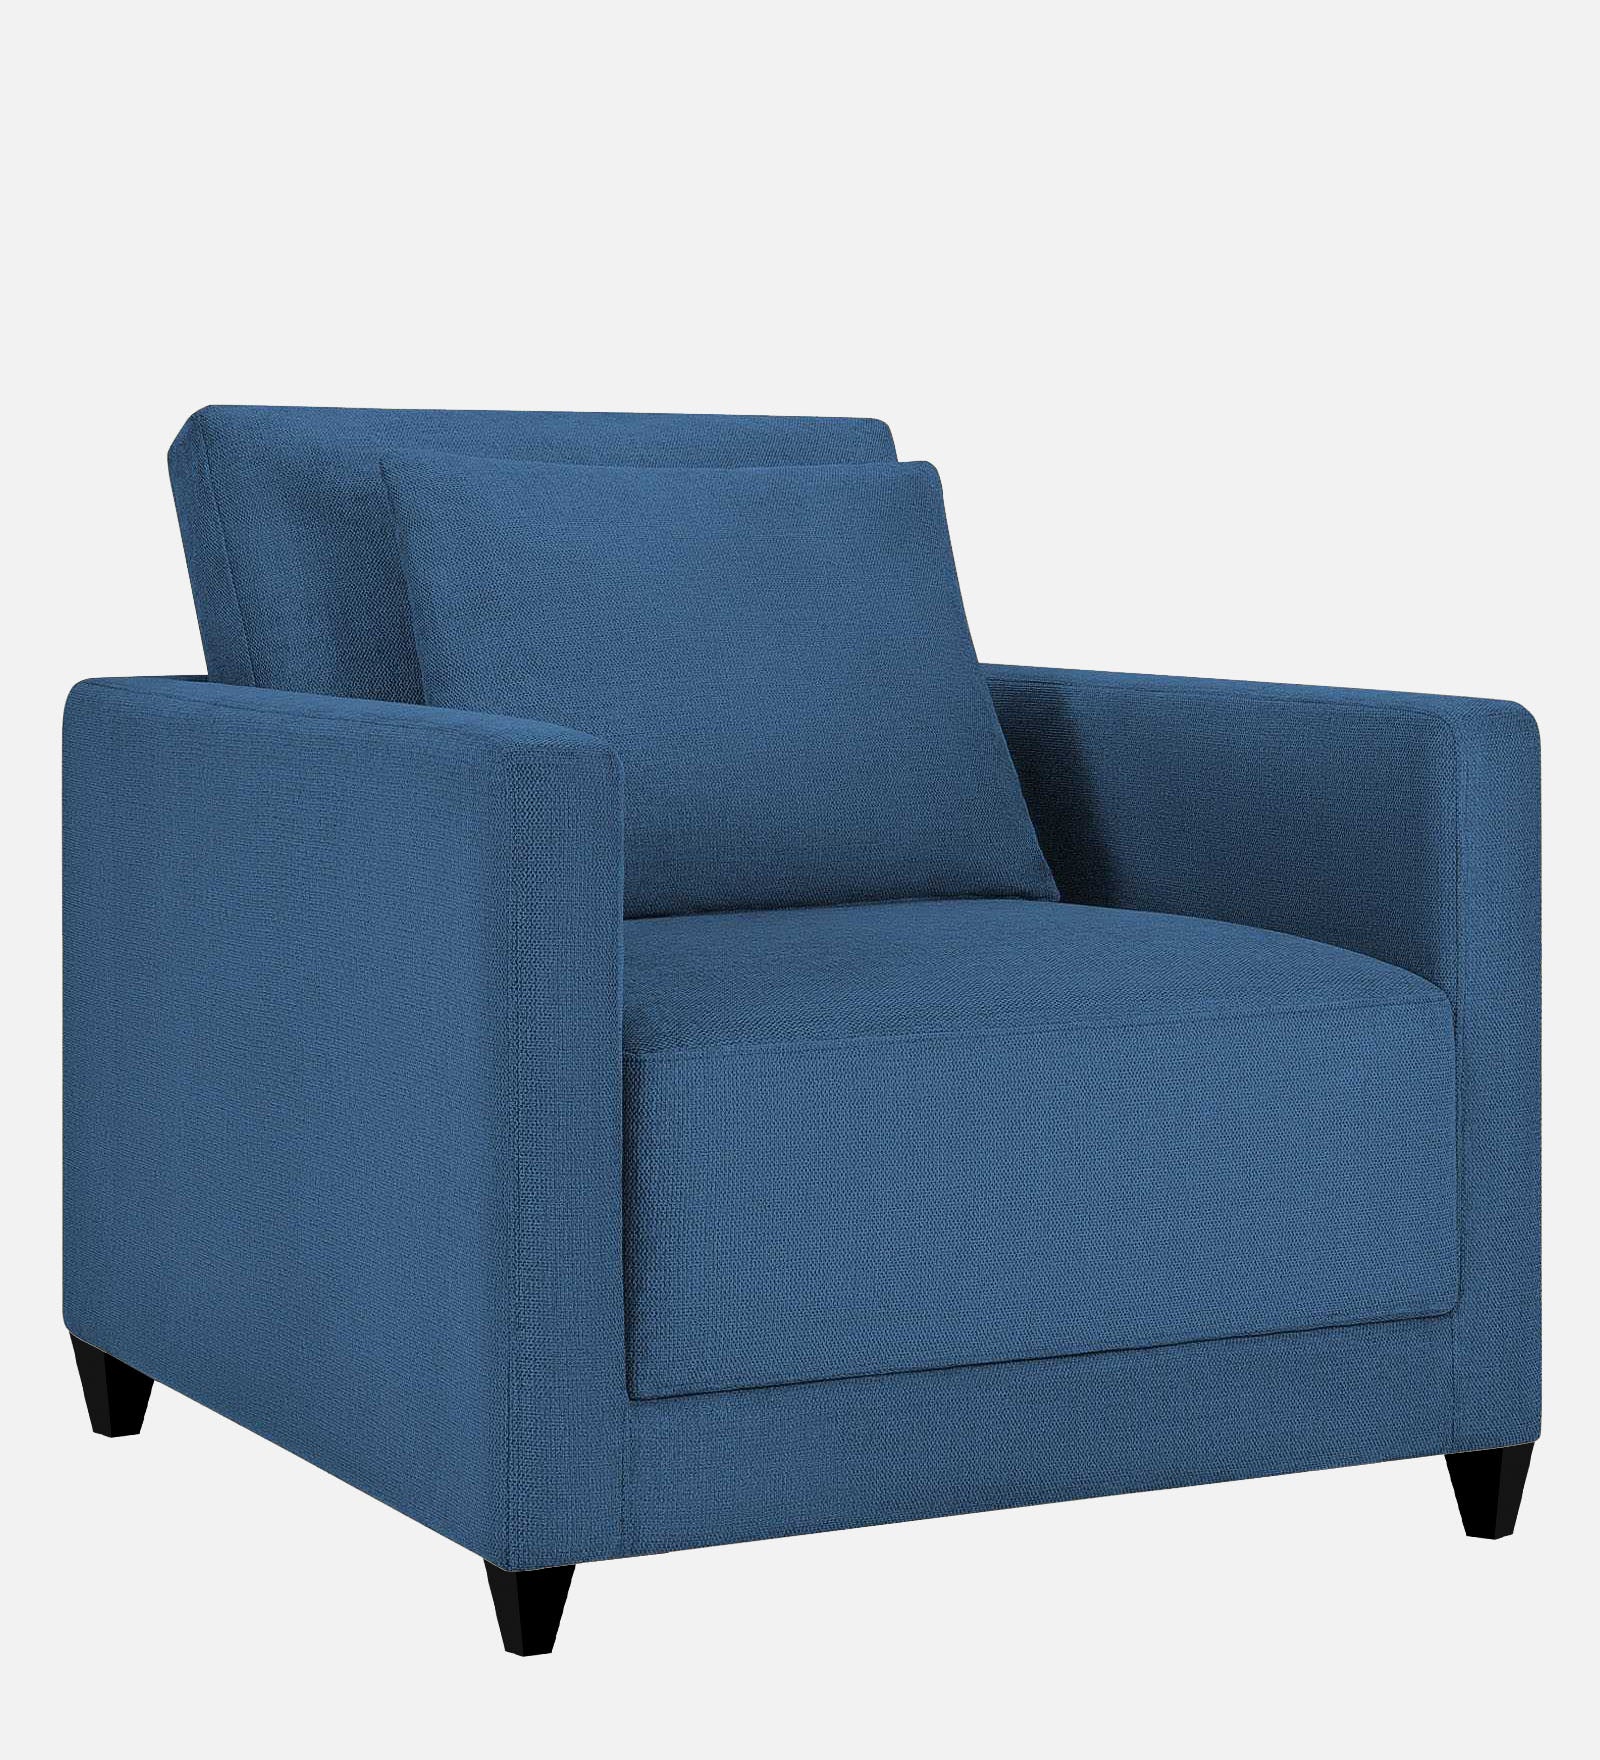 Kera Fabric 1 Seater Sofa in Light Blue Colour